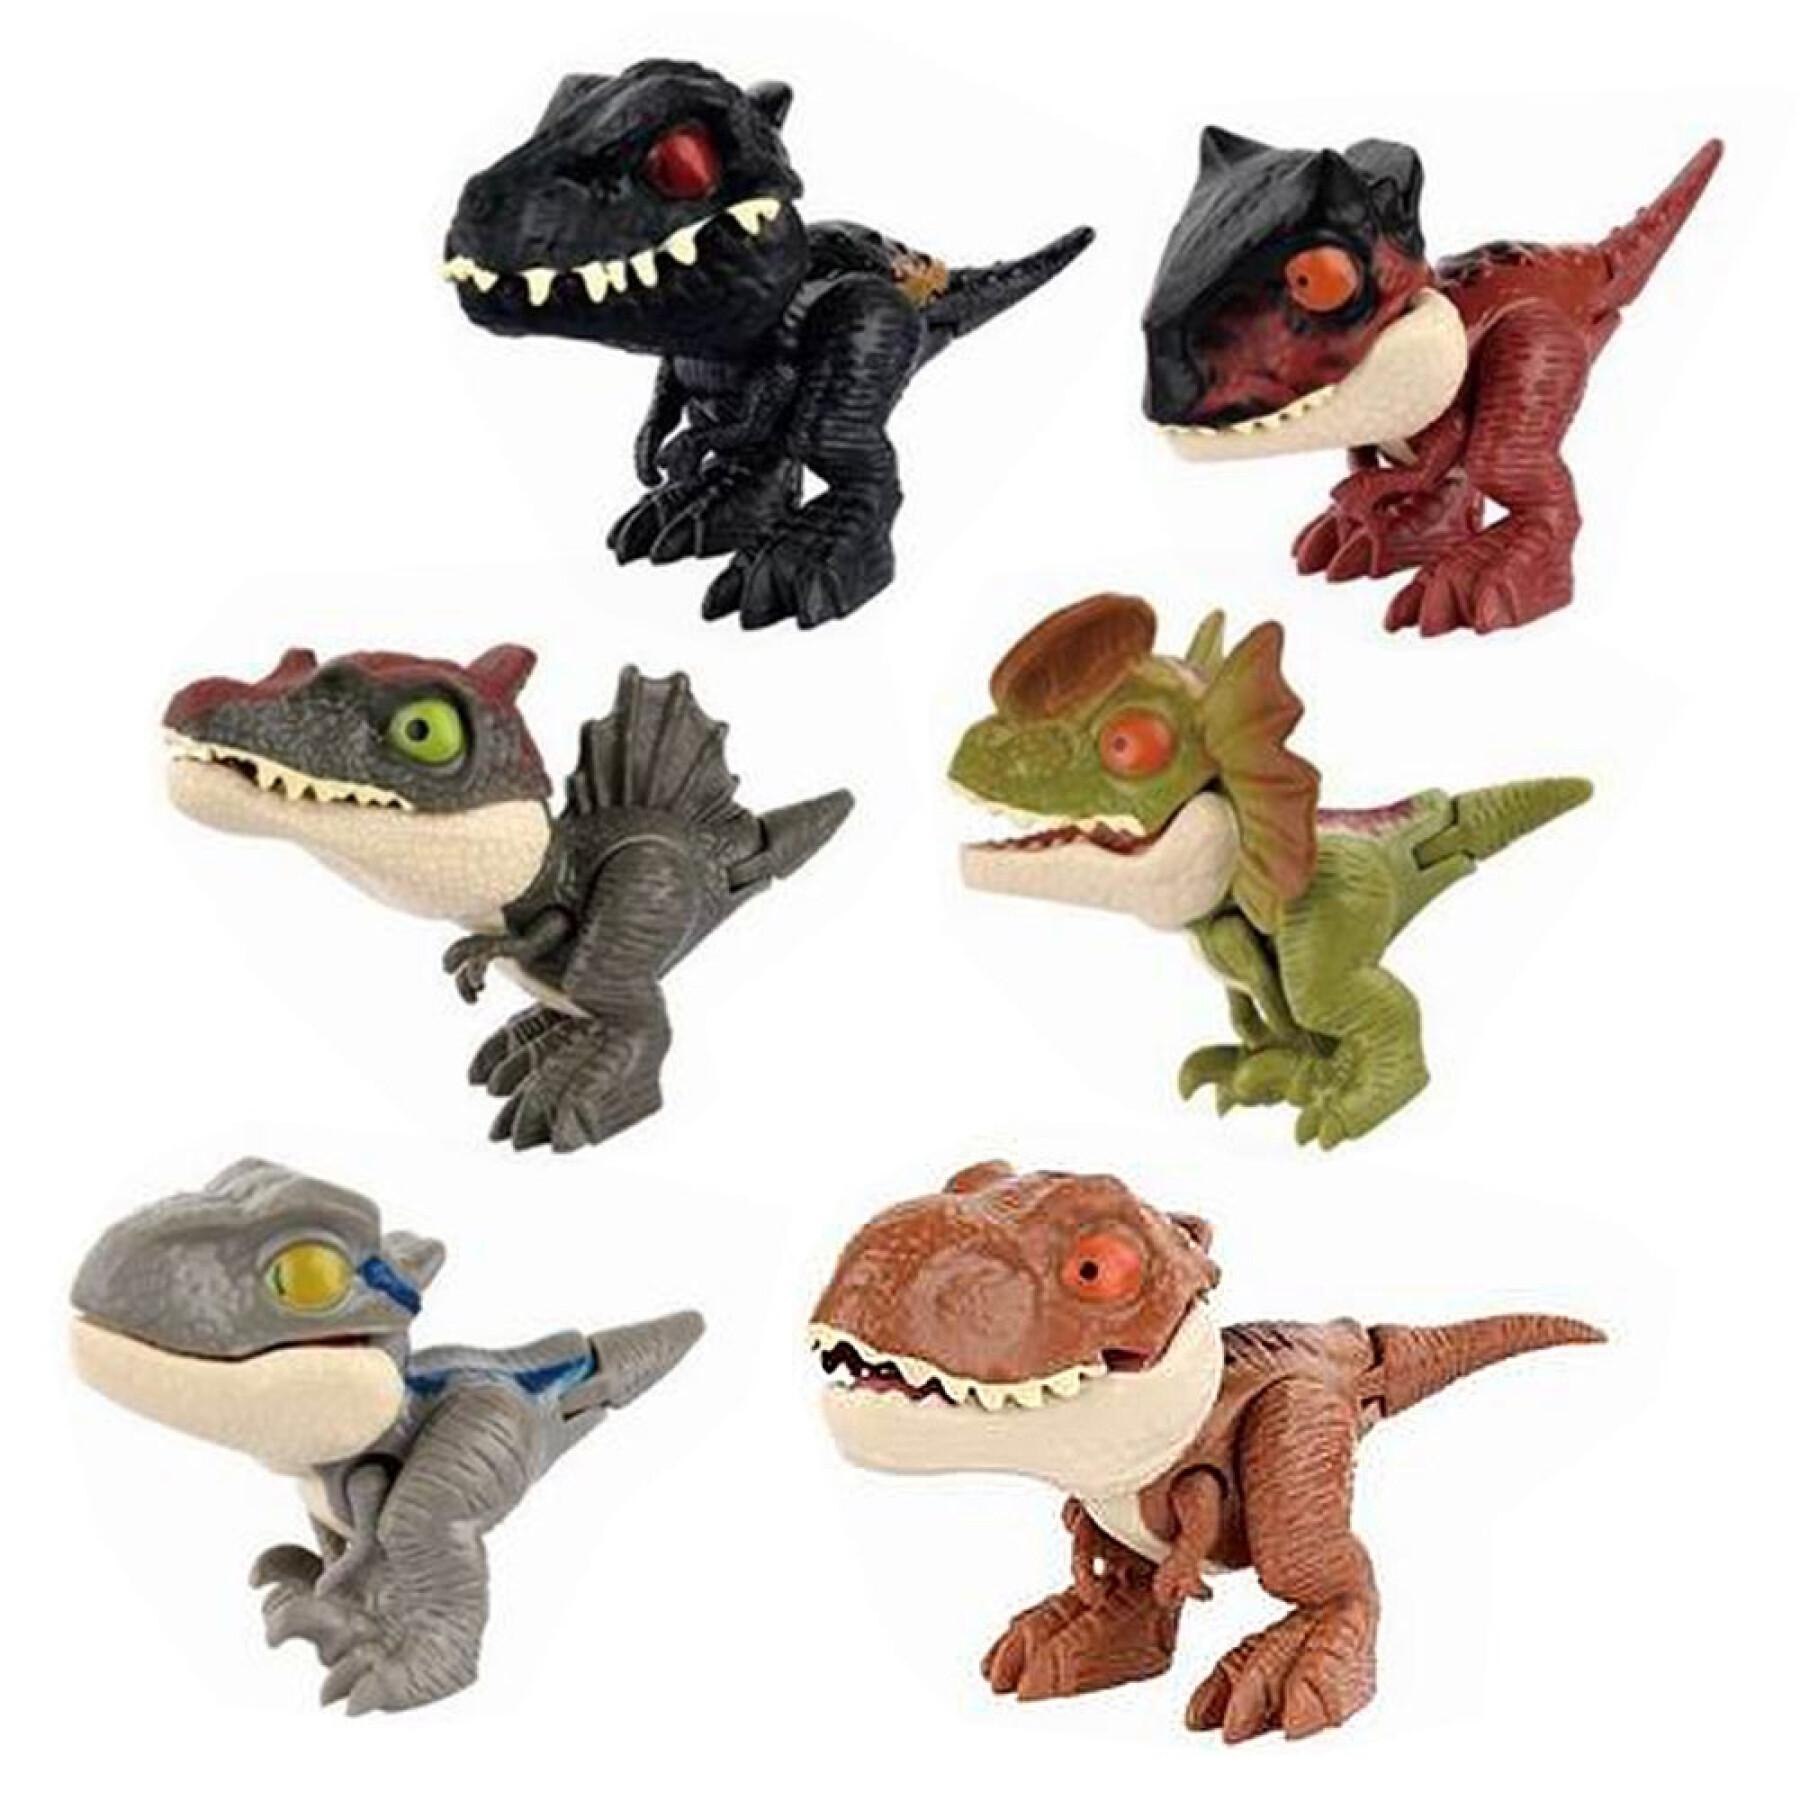 Oeuf surprise avec figurine dinosaures 6 modèles assorties Fantastiko